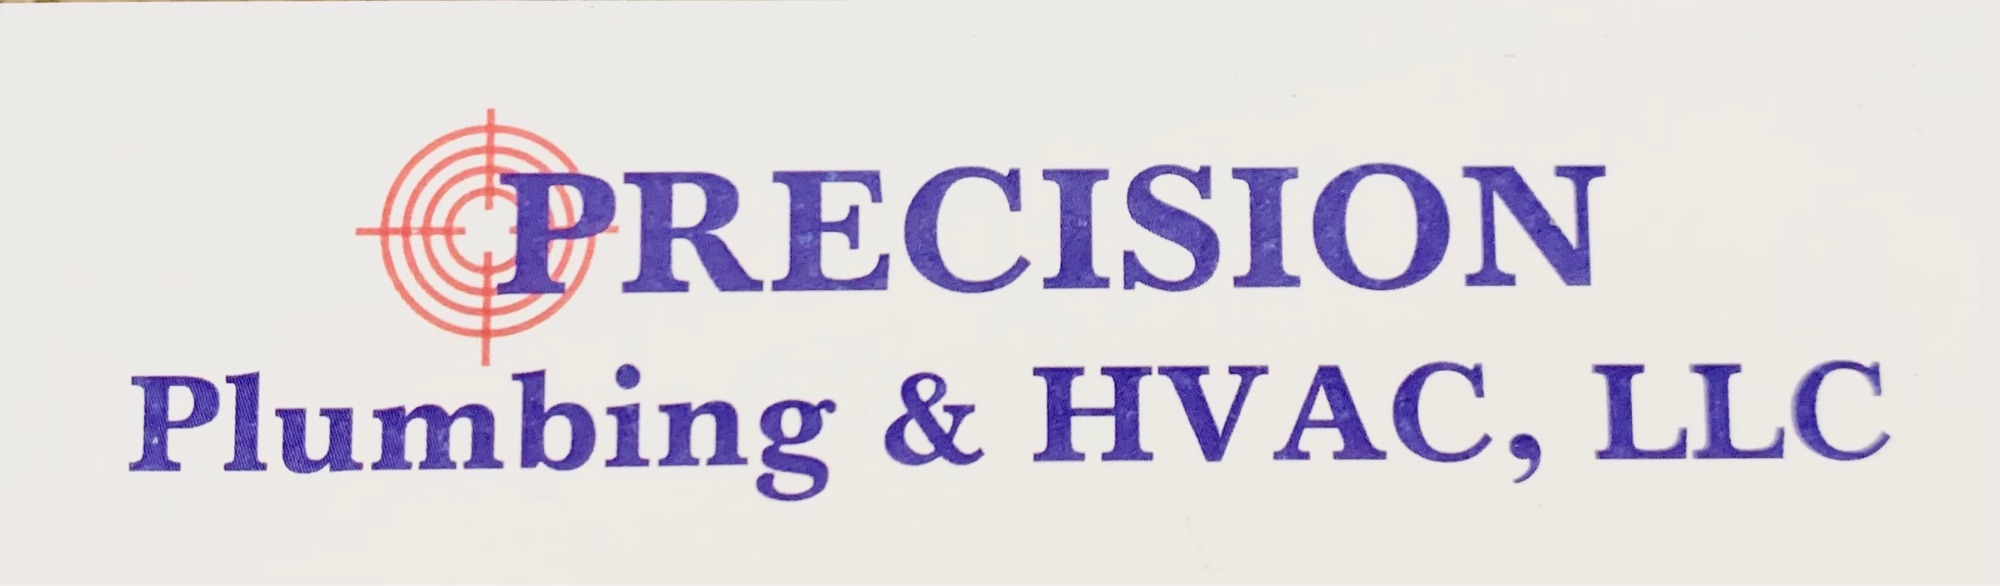 Precision Plumbing & HVAC, LLC Logo